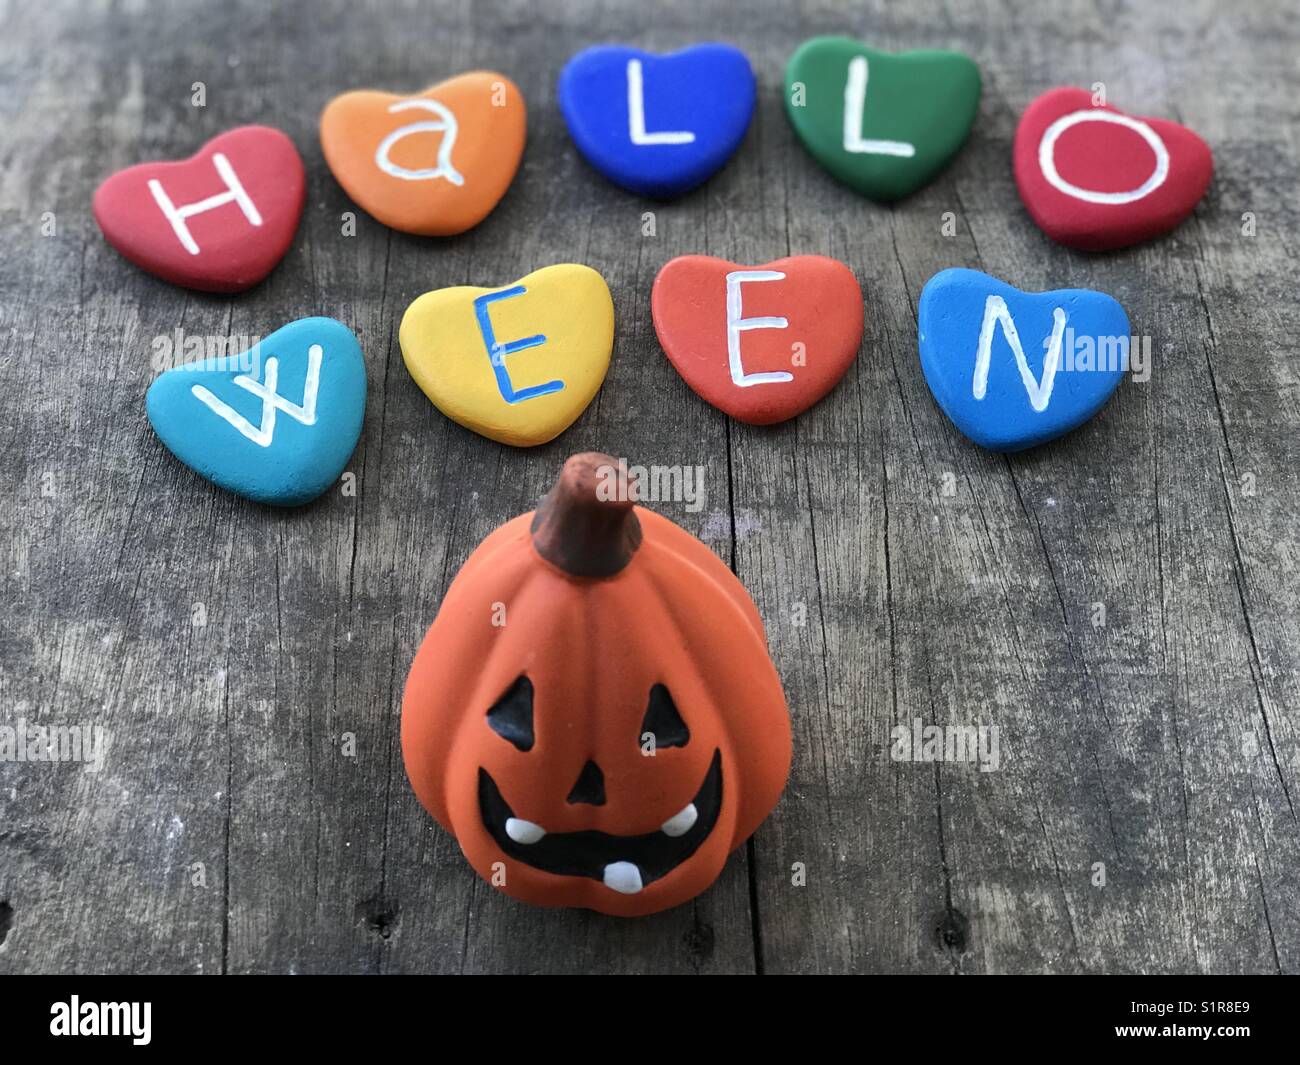 Halloween Banque D'Images